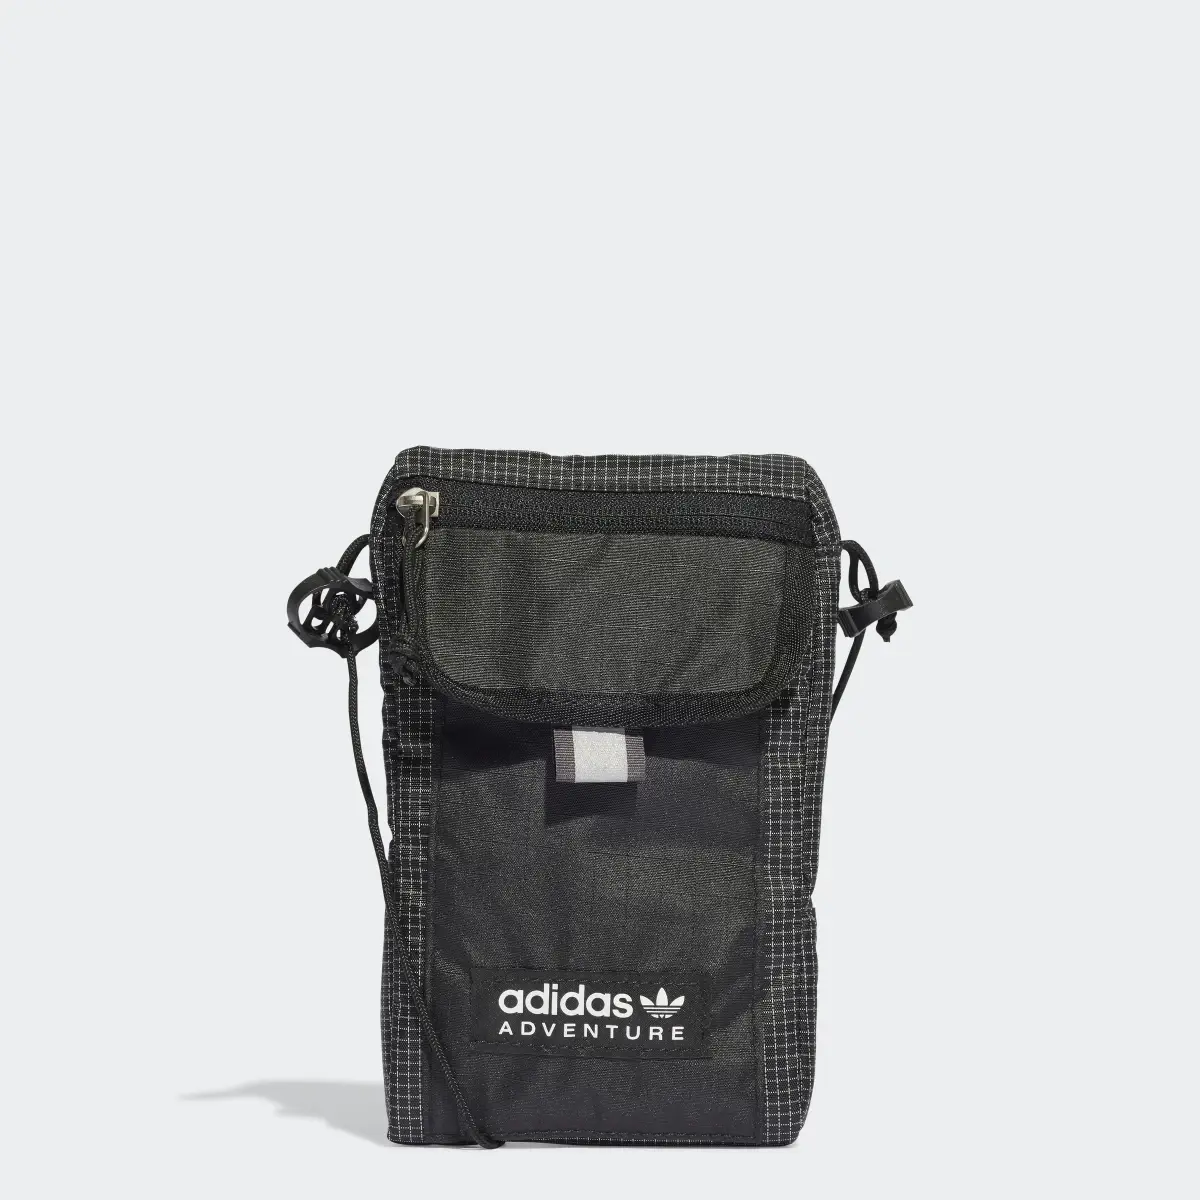 Adidas Adventure Flag Bag Small. 1